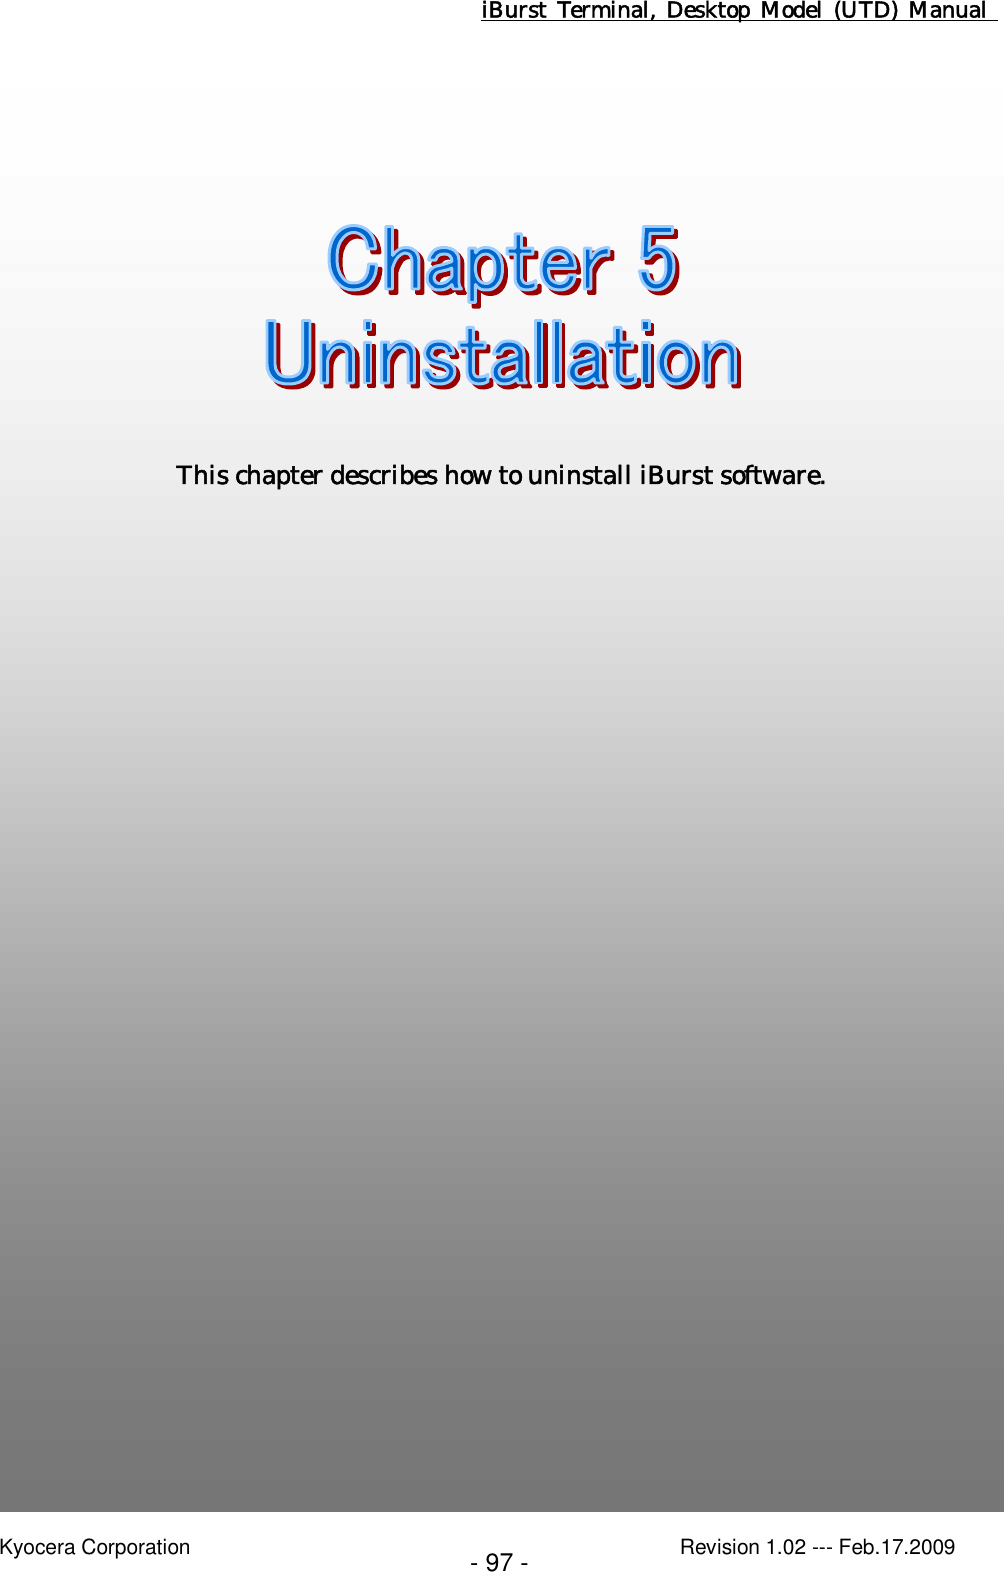 iBurst  Terminal, Desktop  Model  (UTD)  Manual    Kyocera Corporation                                                                                              Revision 1.02 --- Feb.17.2009 - 97 -   Chapter 5 Uninstallation                                    This chapter describes how to uninstall iBurst software. 